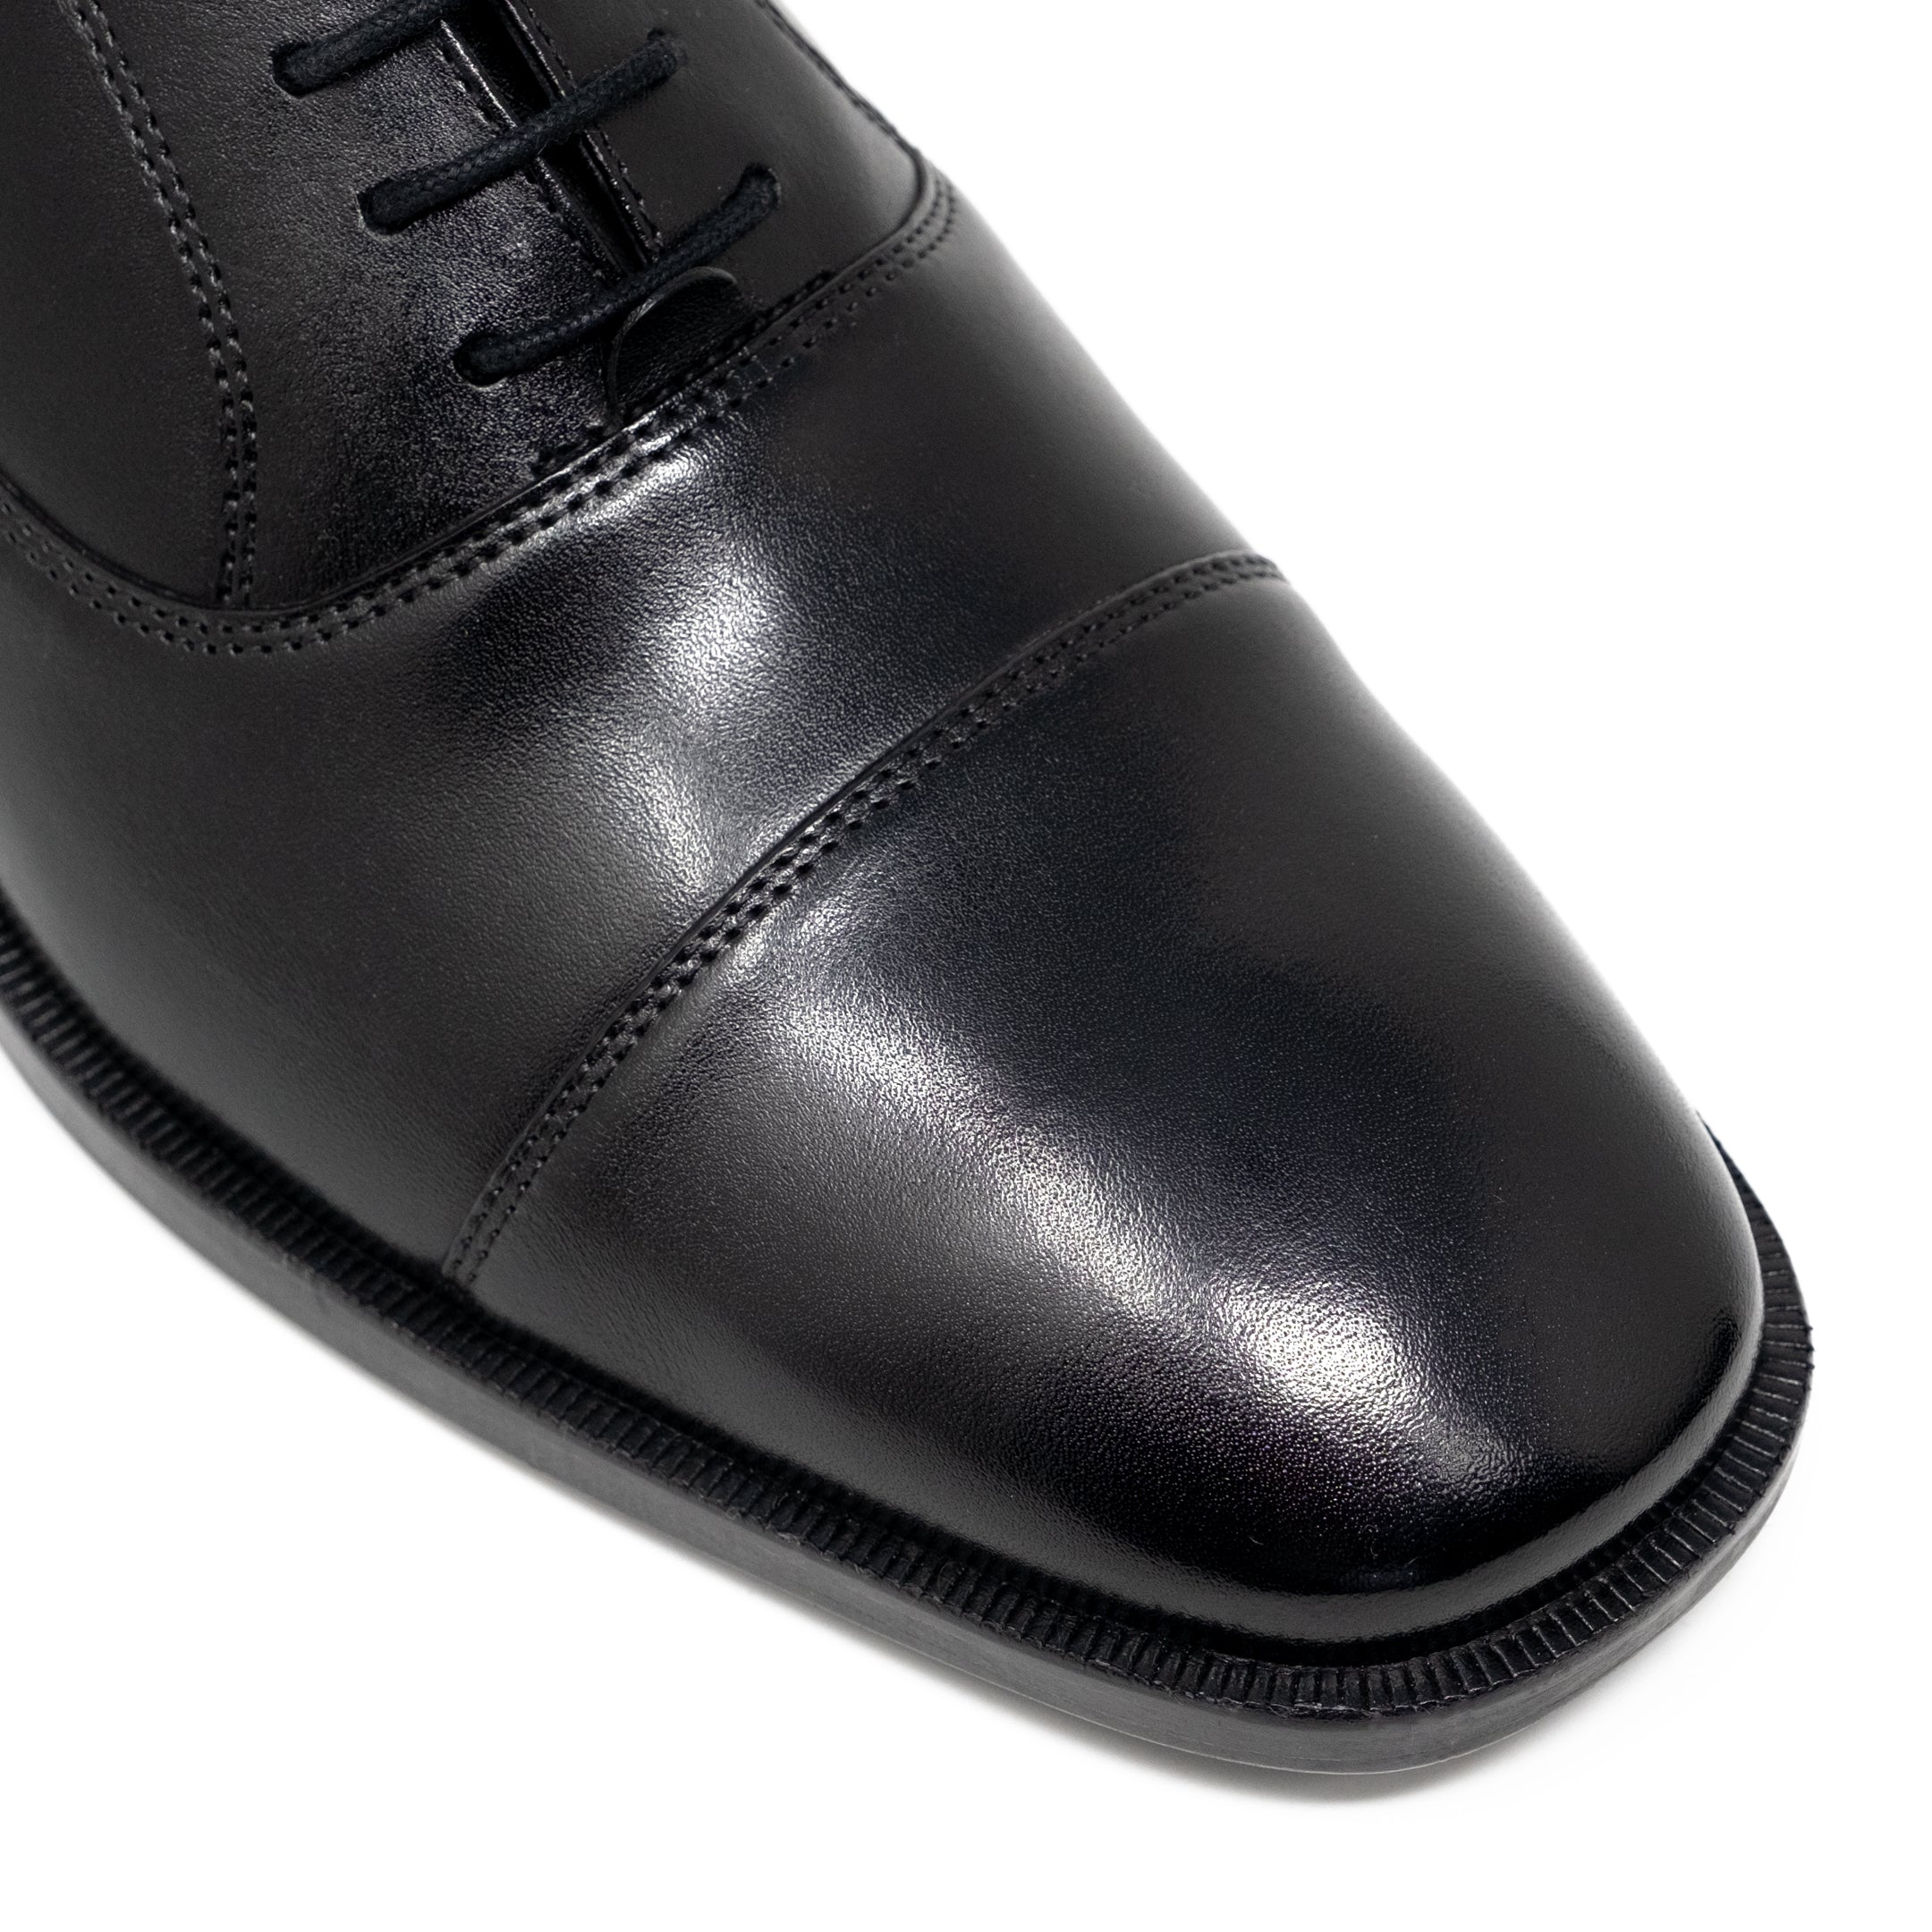 Walk London Mens Alex Toe Cap Shoe in Black Leather